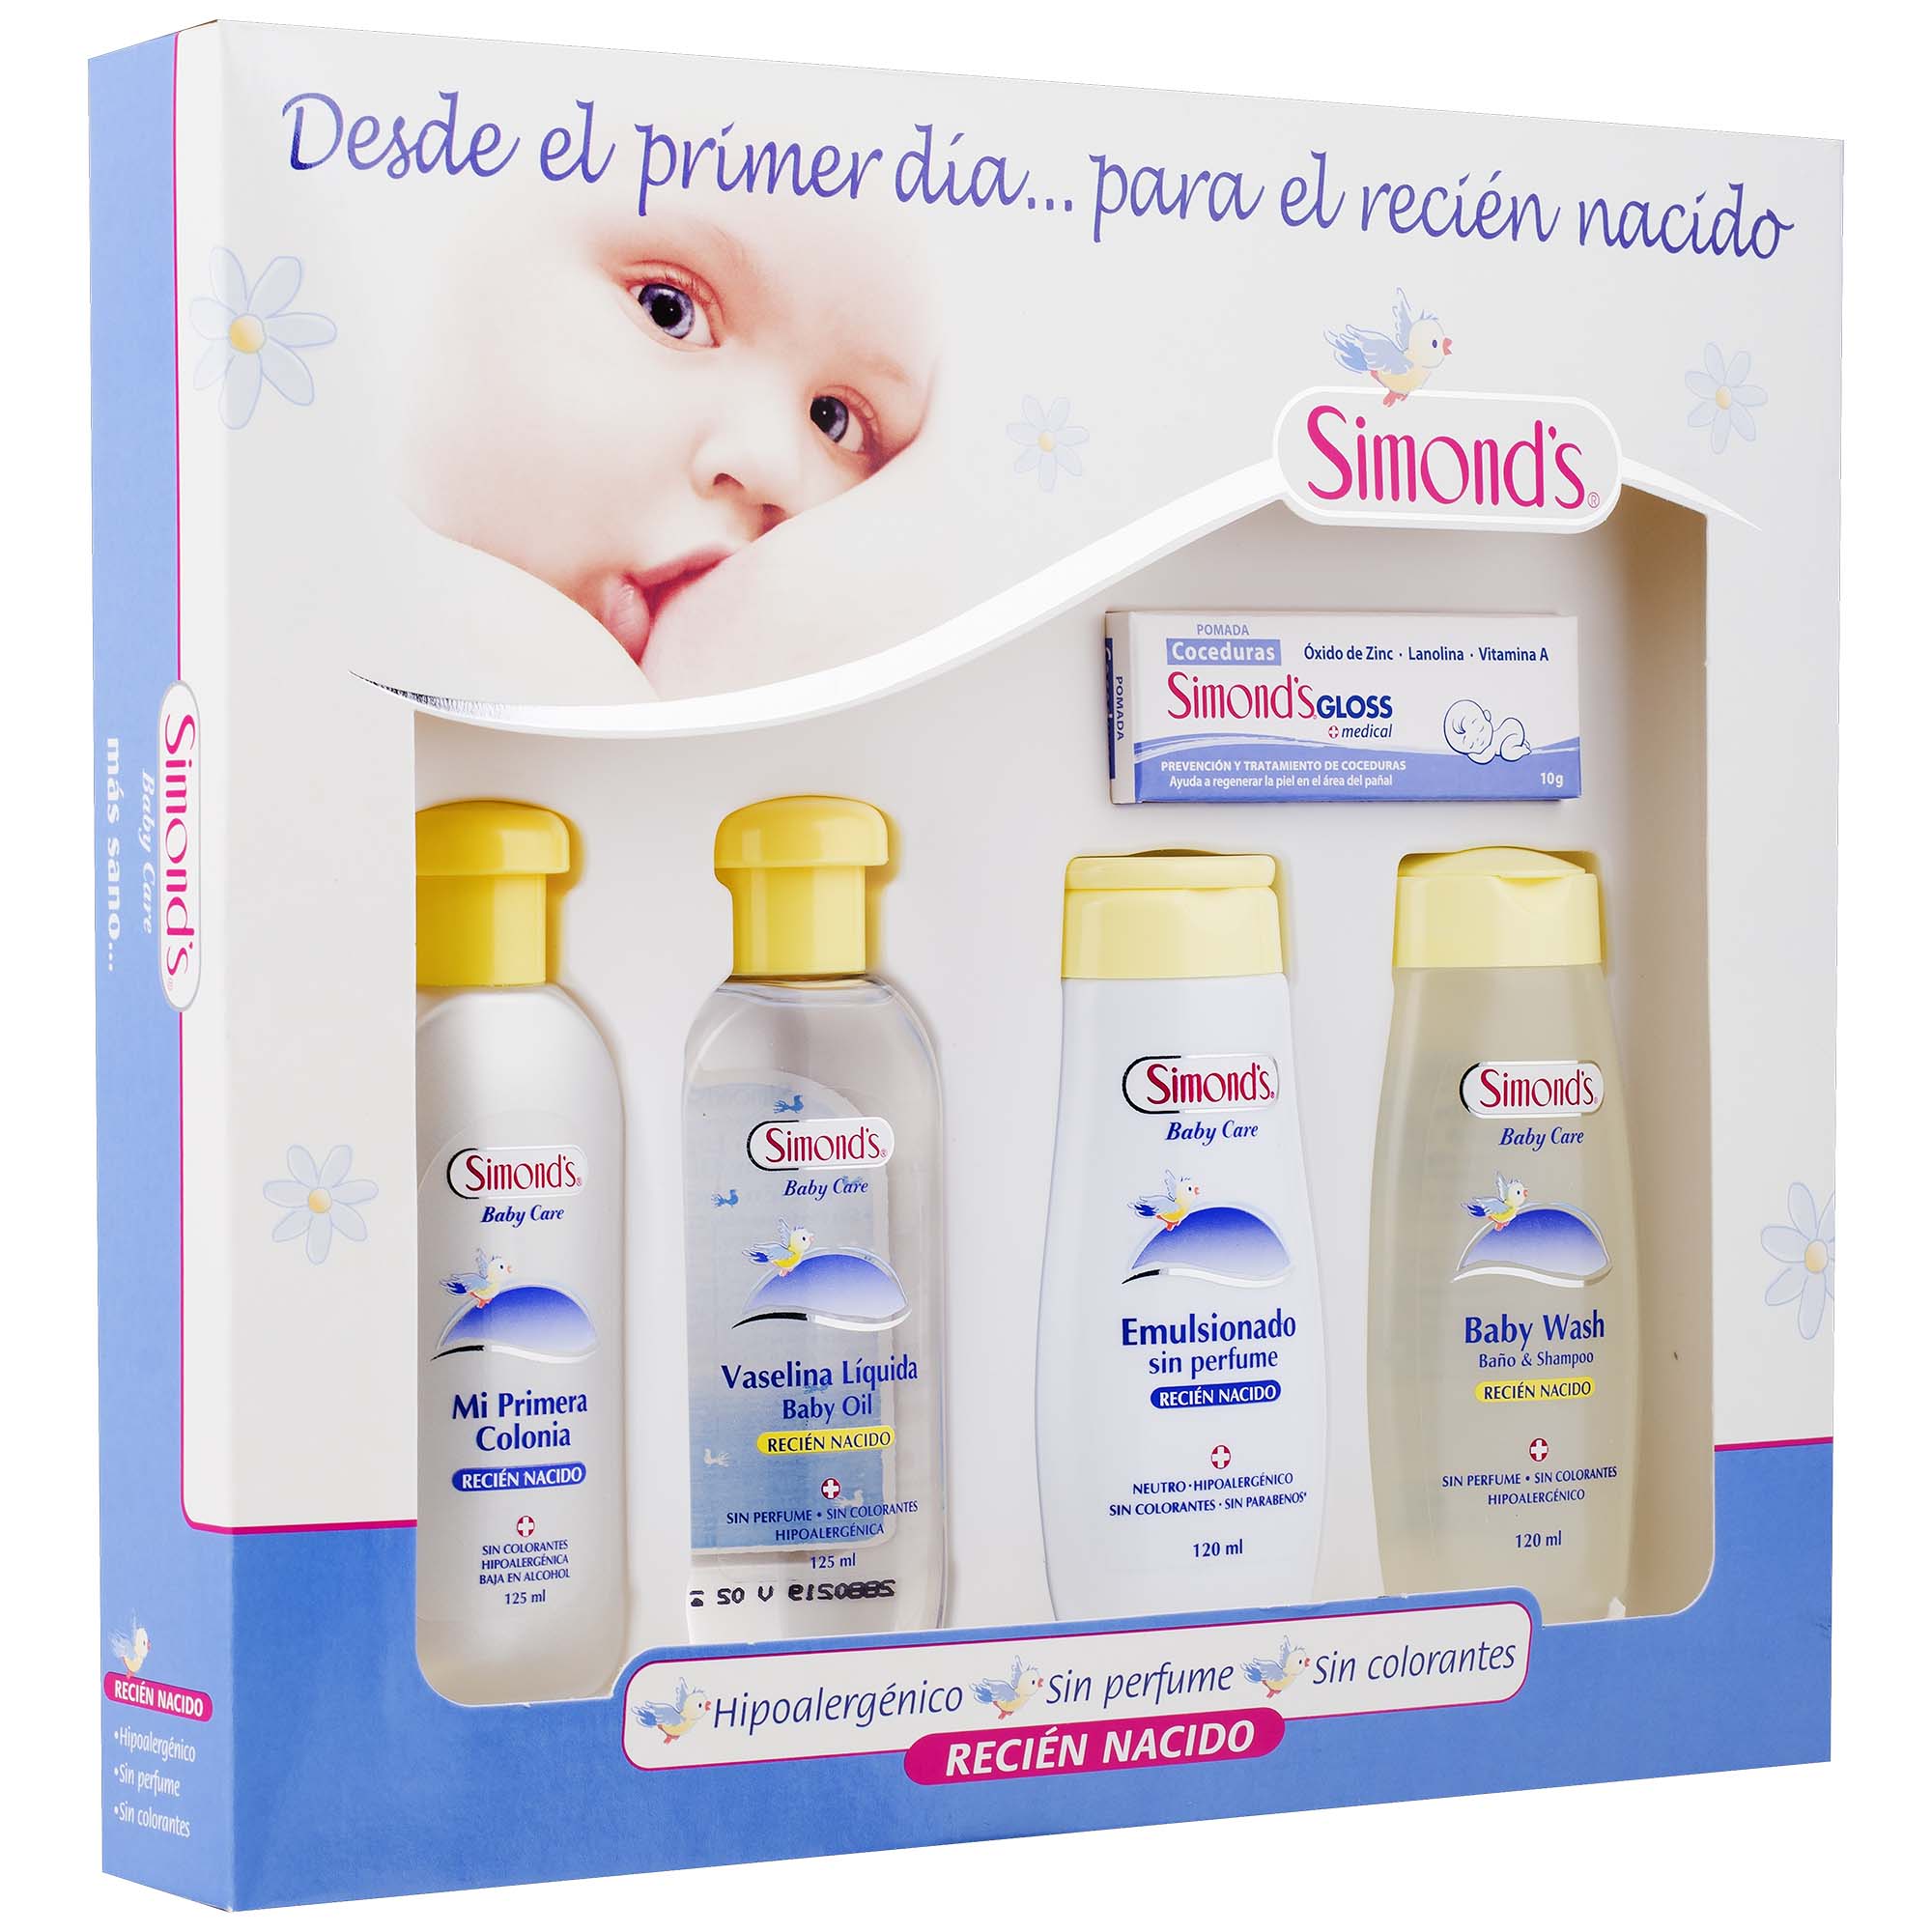 Estuche Simond's Bebe Recien Nacido - Pamelita distribuidora